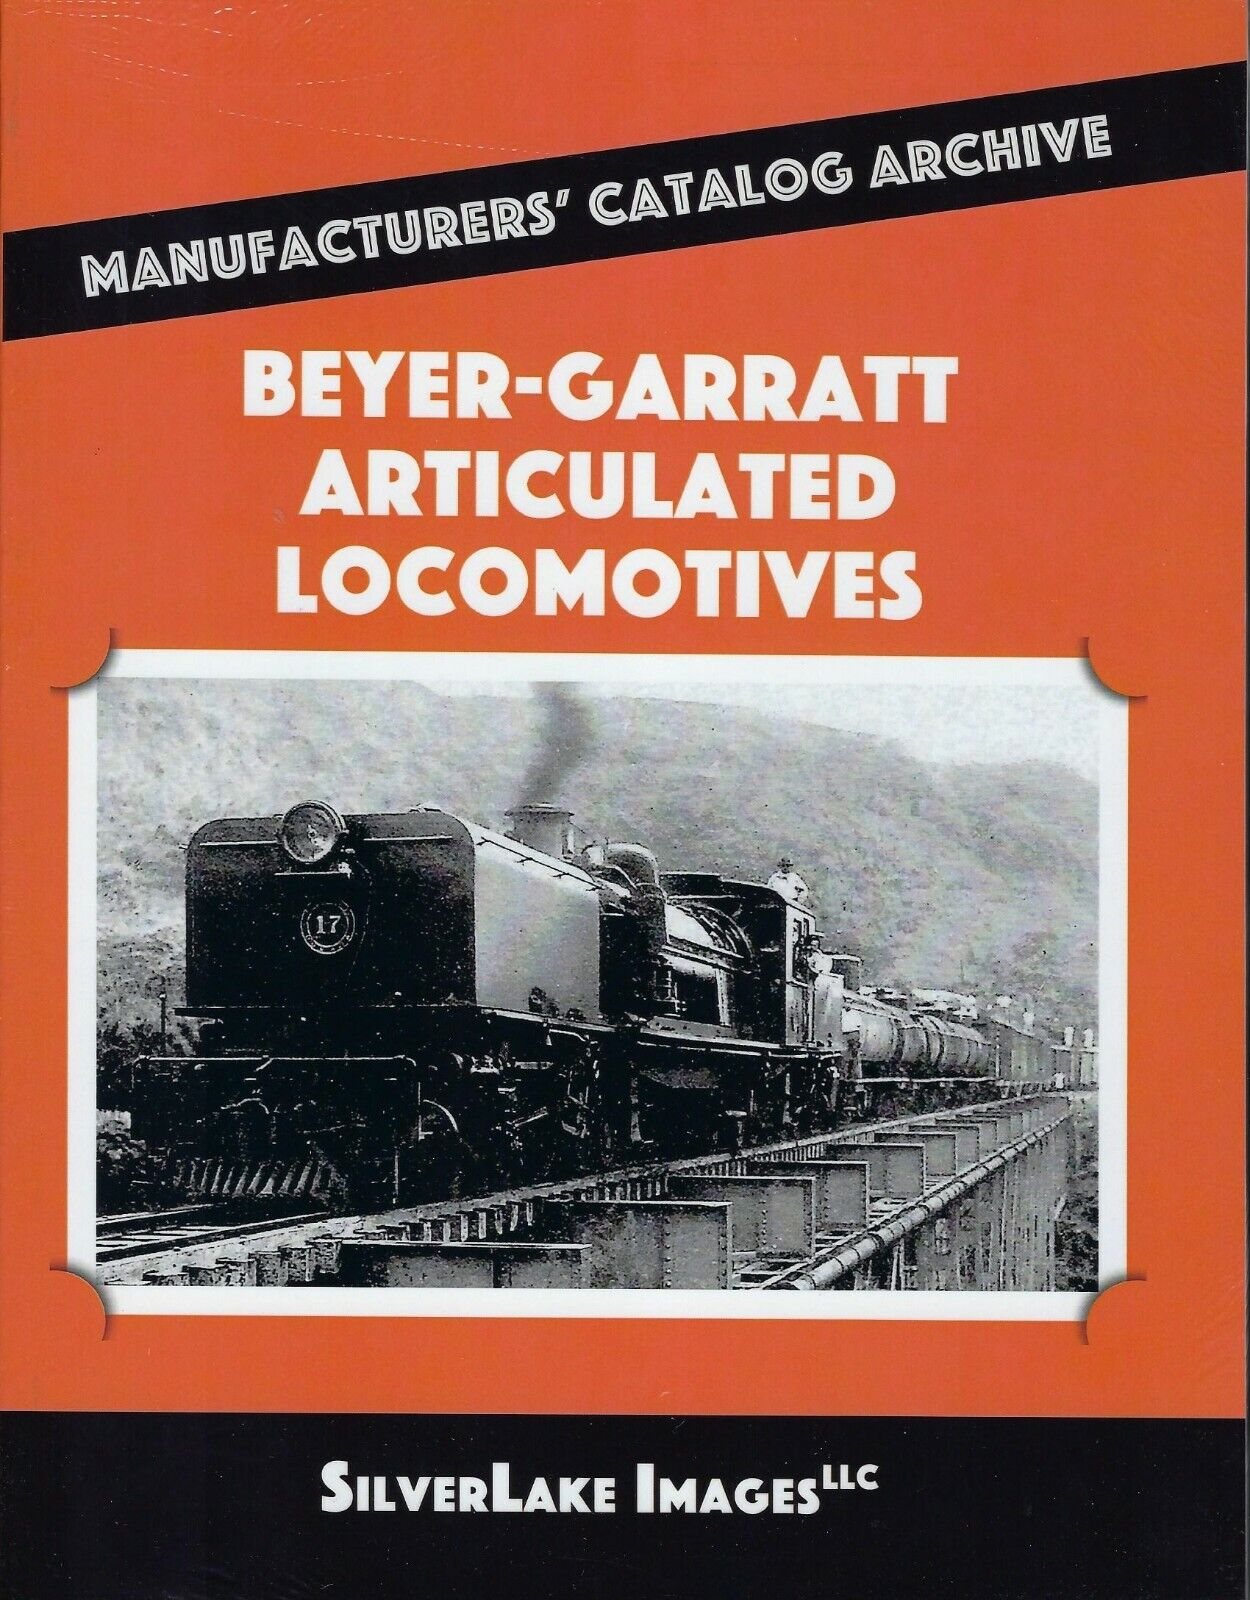 BEYER-GARRATT Articulated Locomotives from Manufacturers\' Catalog Archive (NEW)